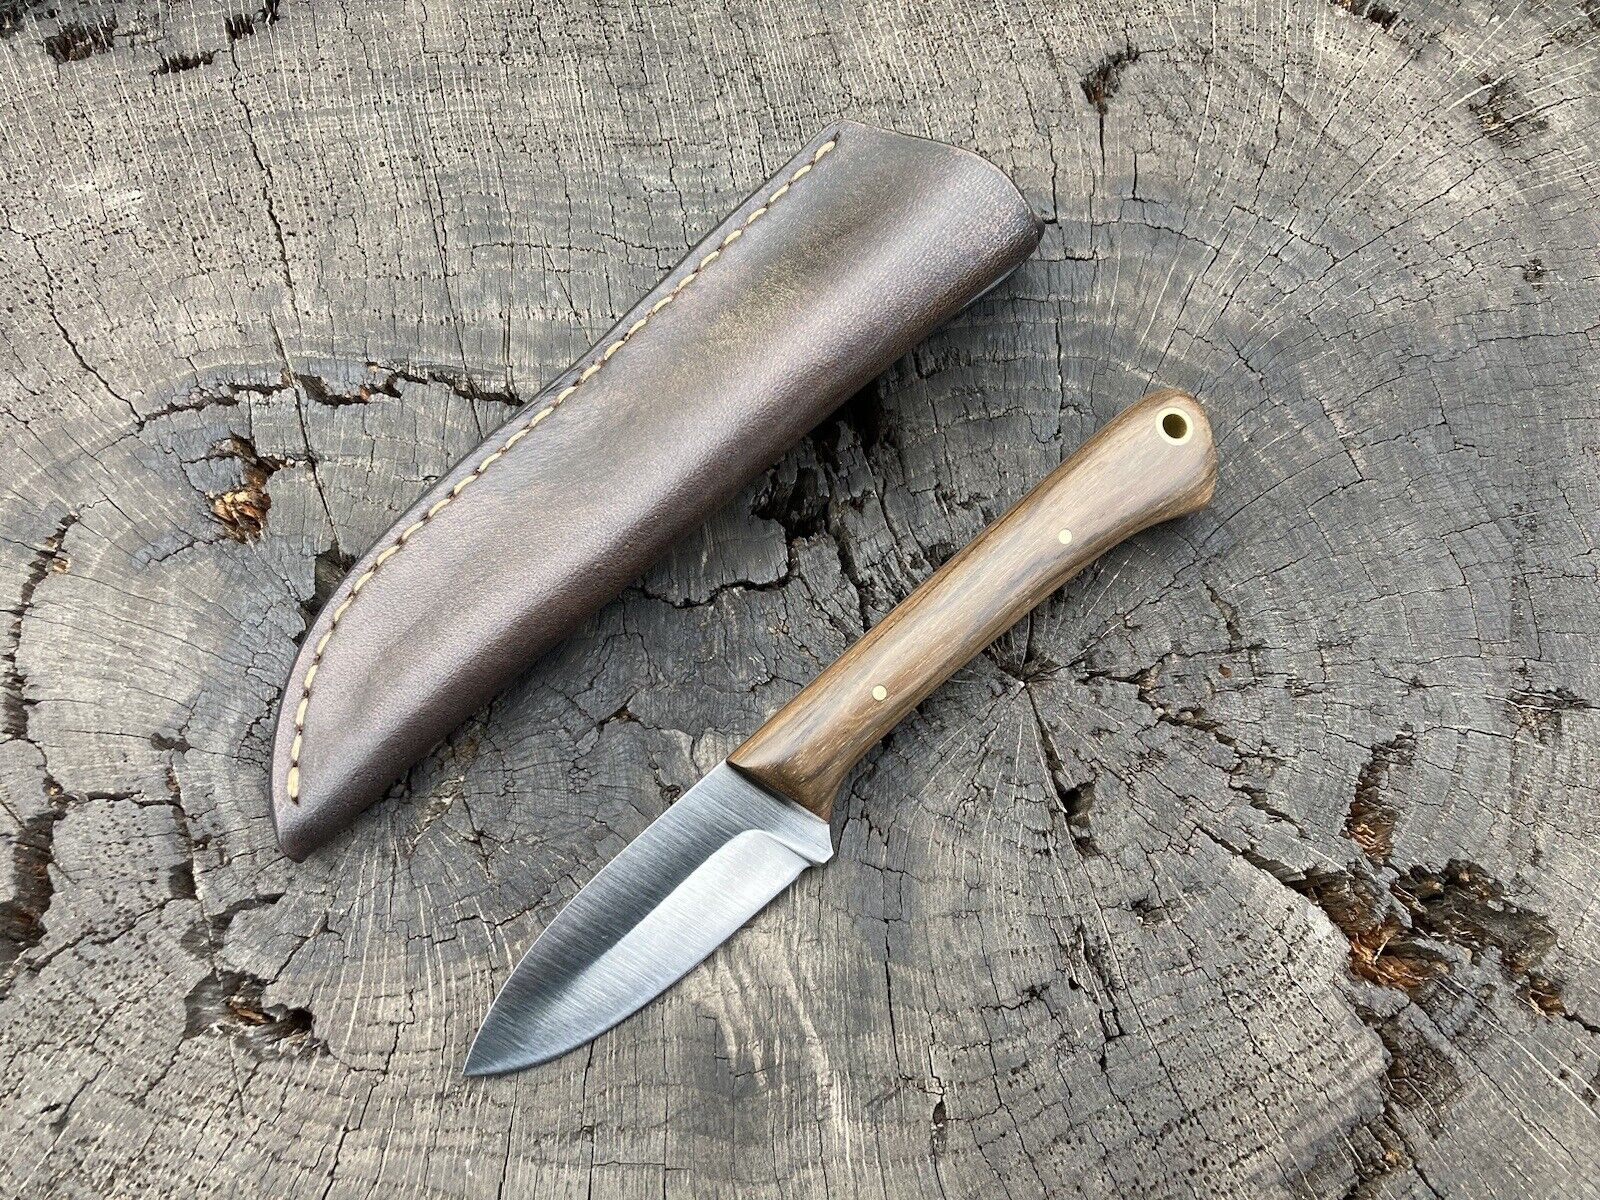 Small Handmade EDC Knife—2.5” Blade—1/16” 15n20 steel—4.25” Ziricote Handle—DLW